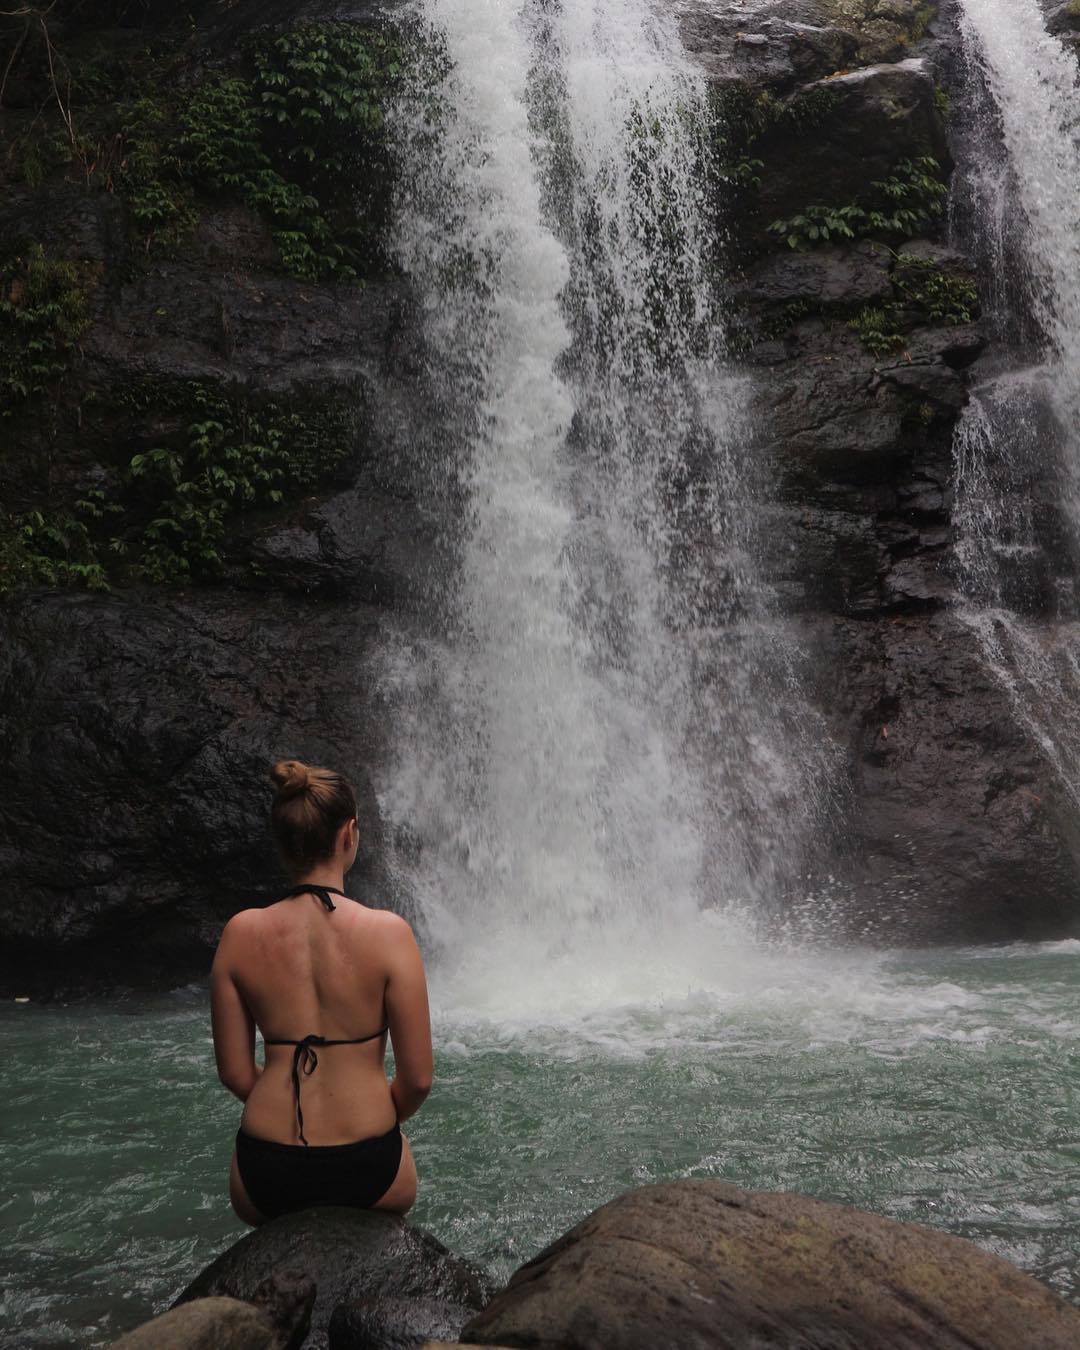 Juwuk Manis Waterfall